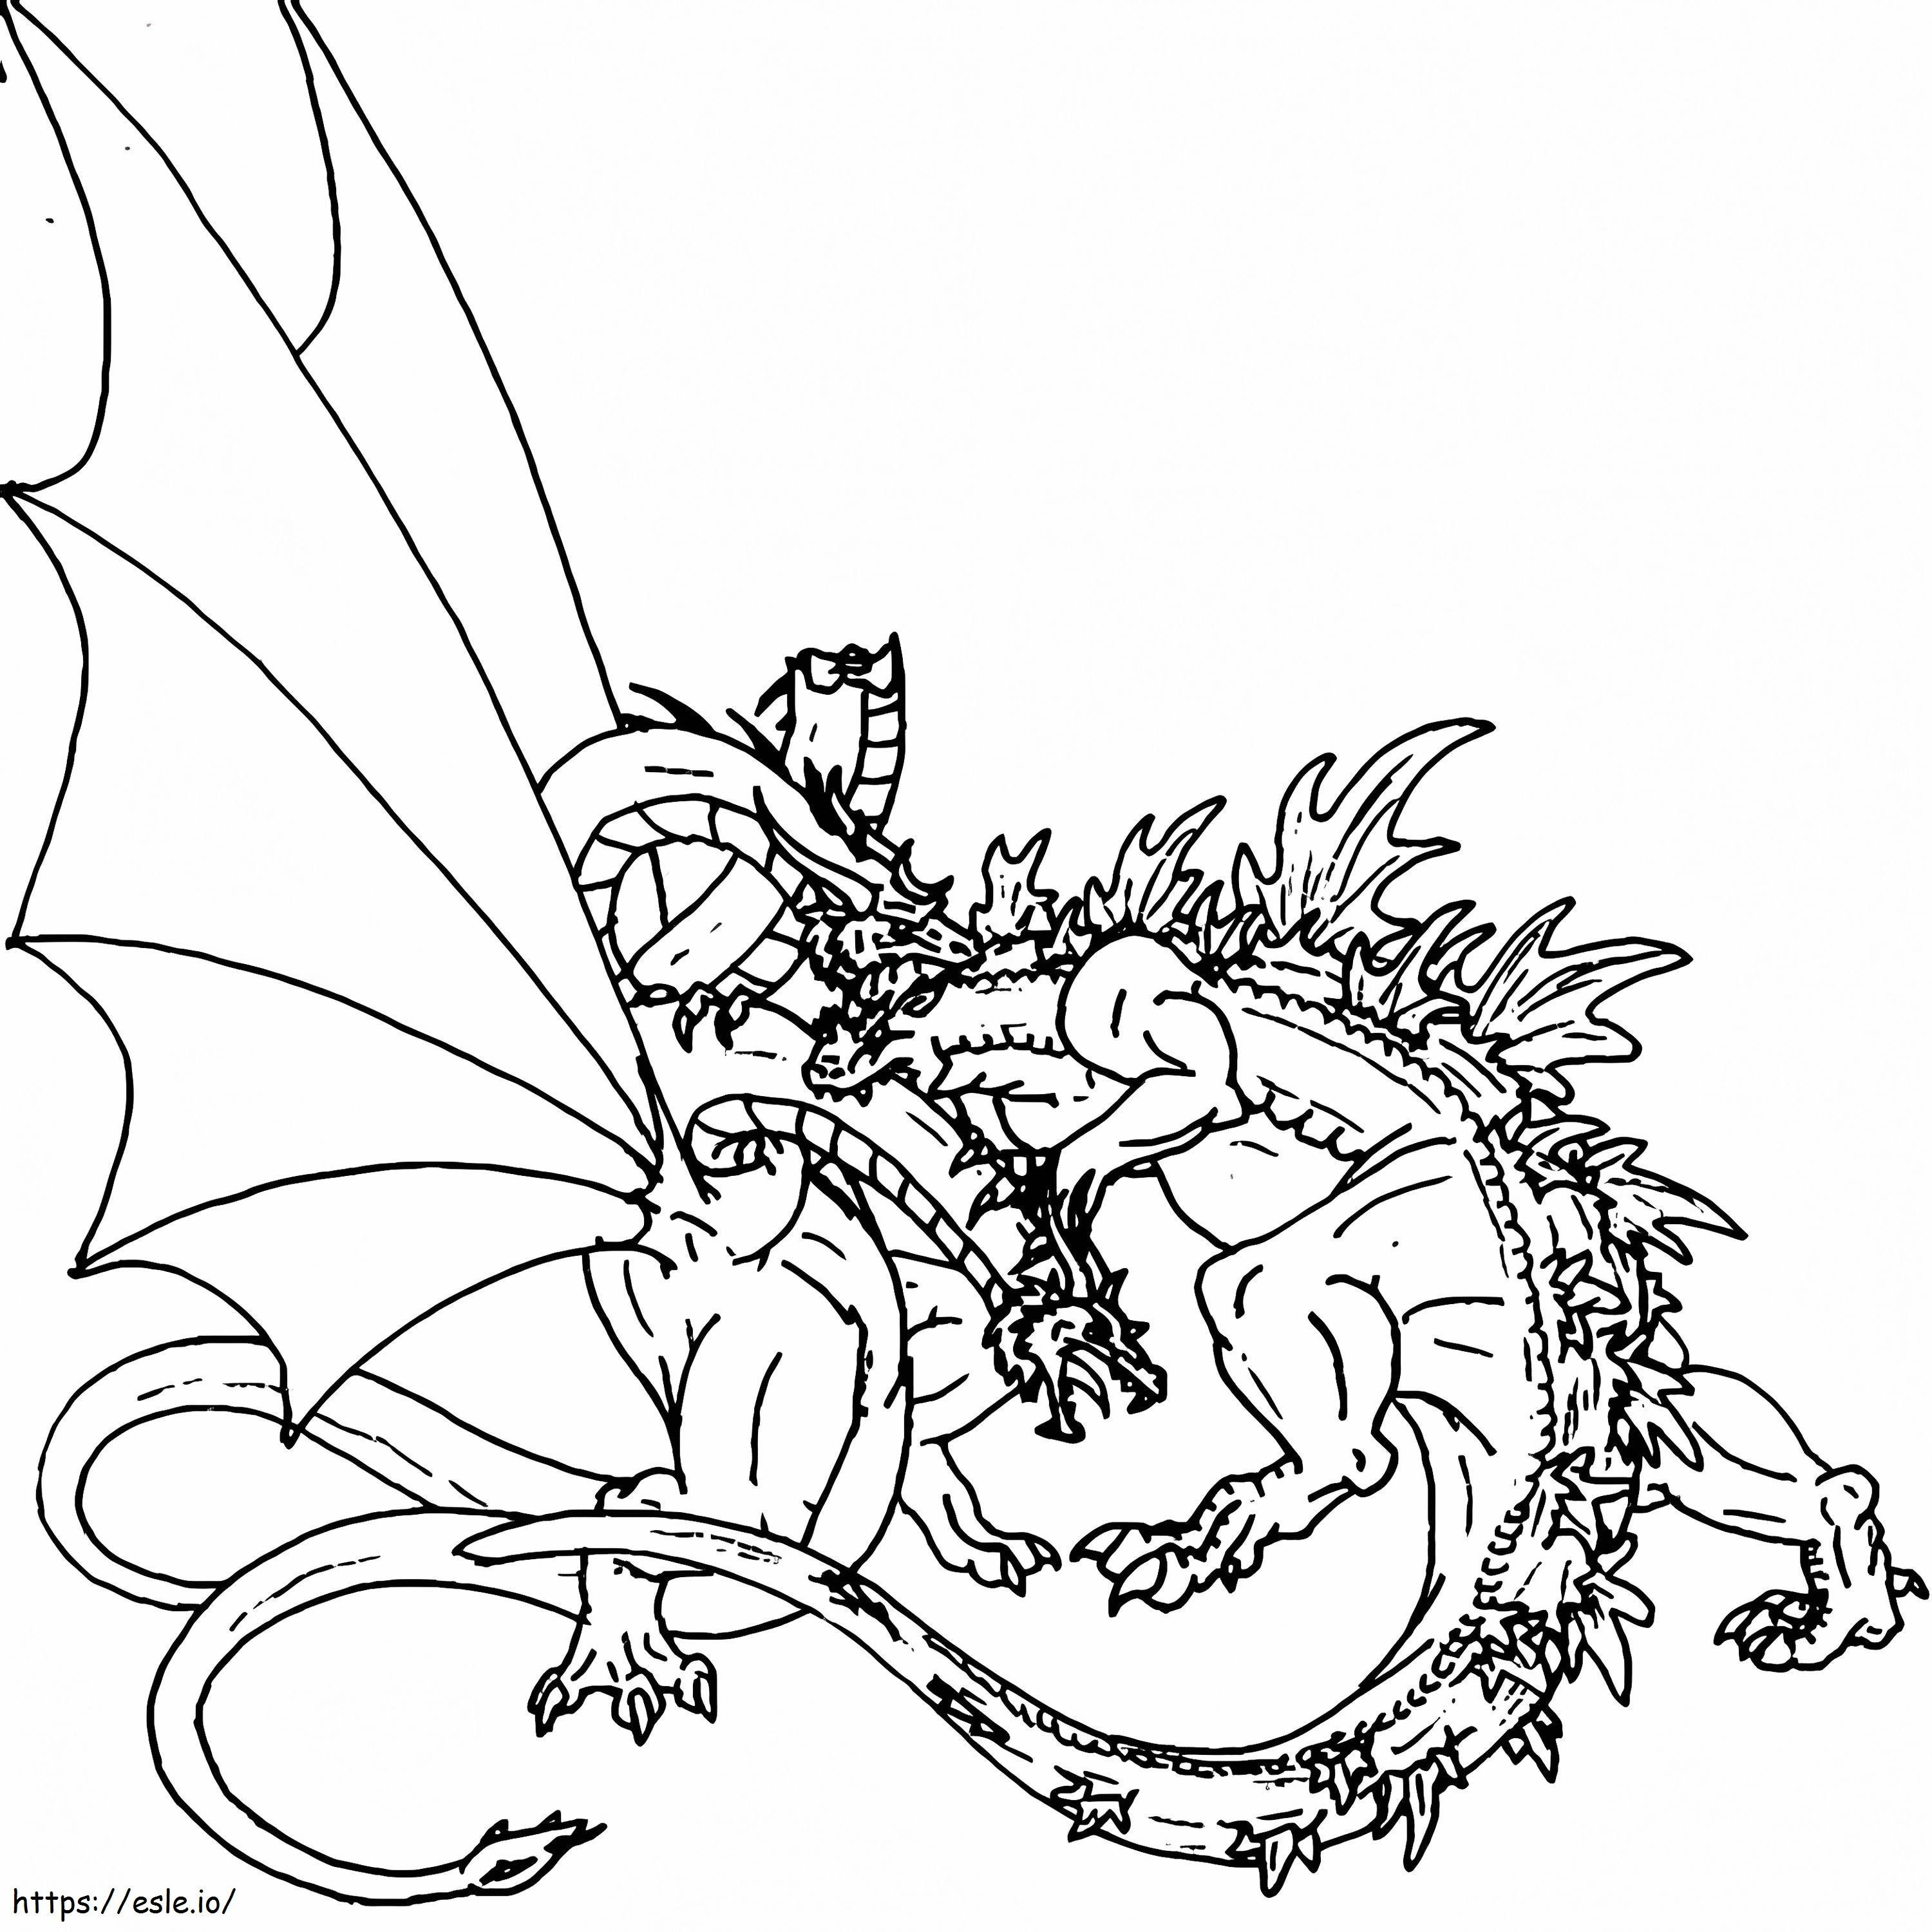 Godzilla Vs Ghidorah coloring page